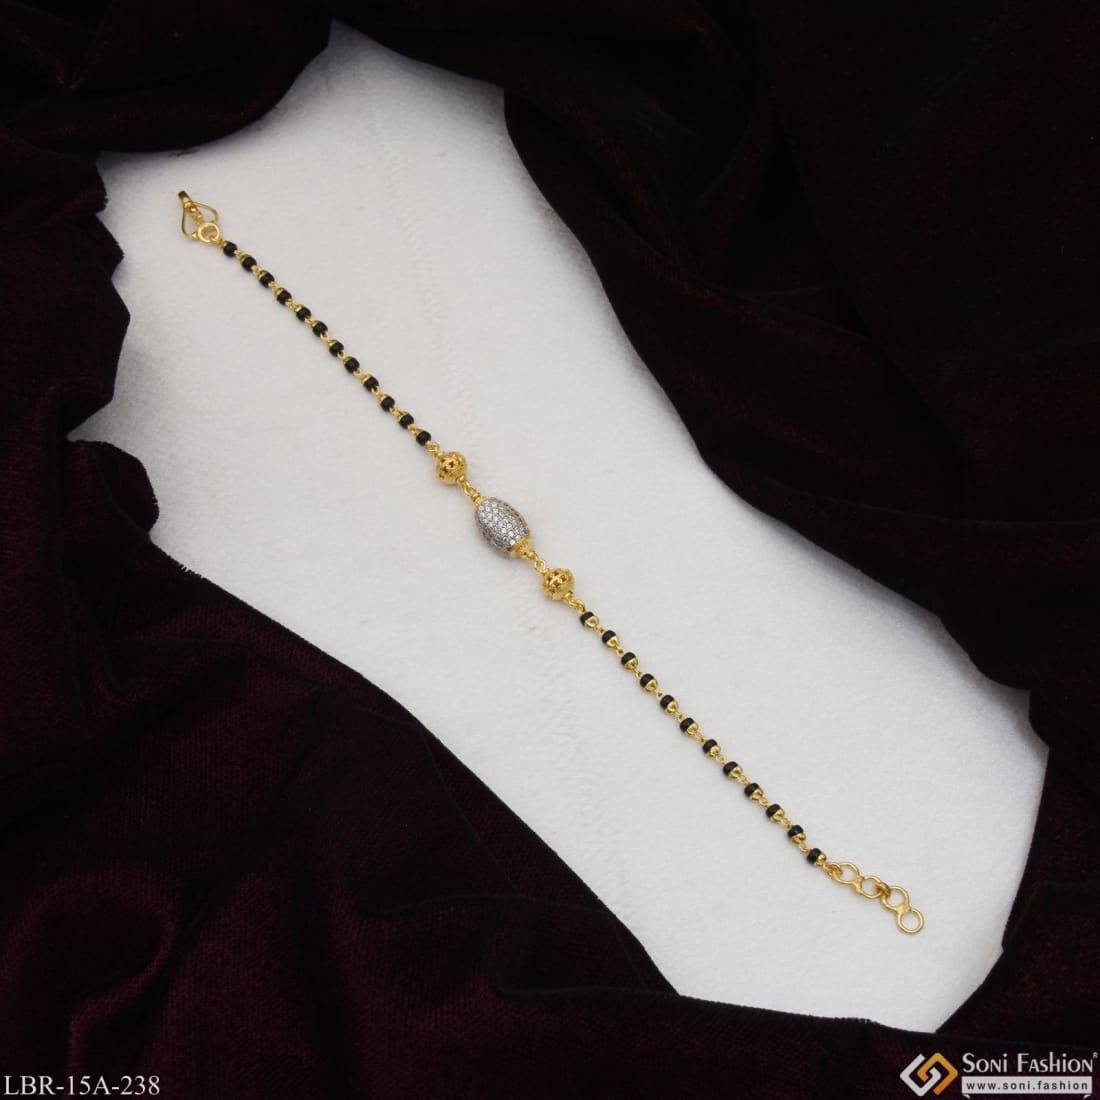 5 Gorgeous Mangalsutra Bracelets We Spotted On Instagram! | Mangalsutra  bracelet, Gold bracelet for girl, Black beads mangalsutra design